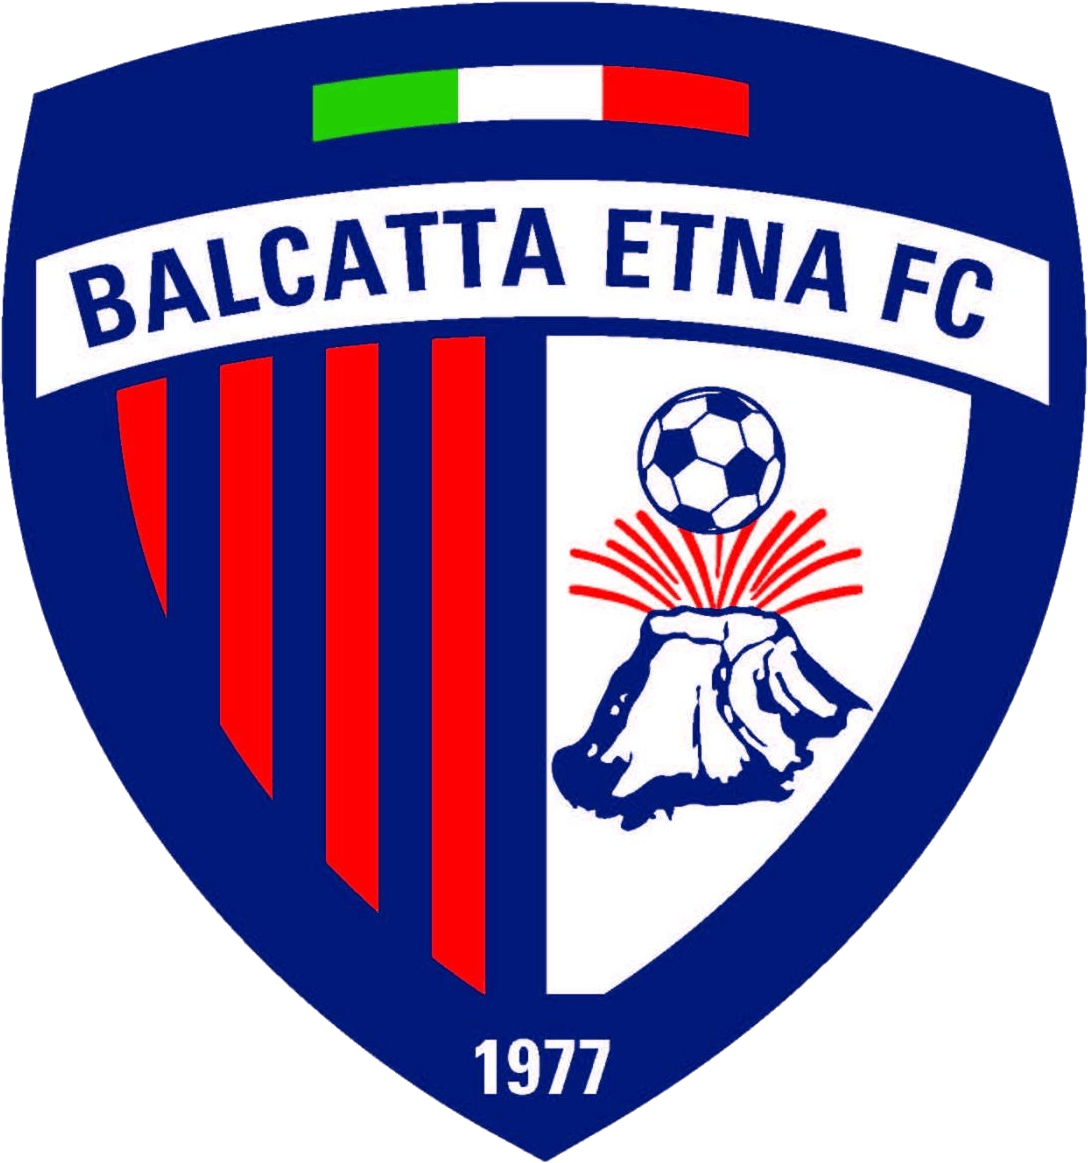 Balcatta Etna FC club badge